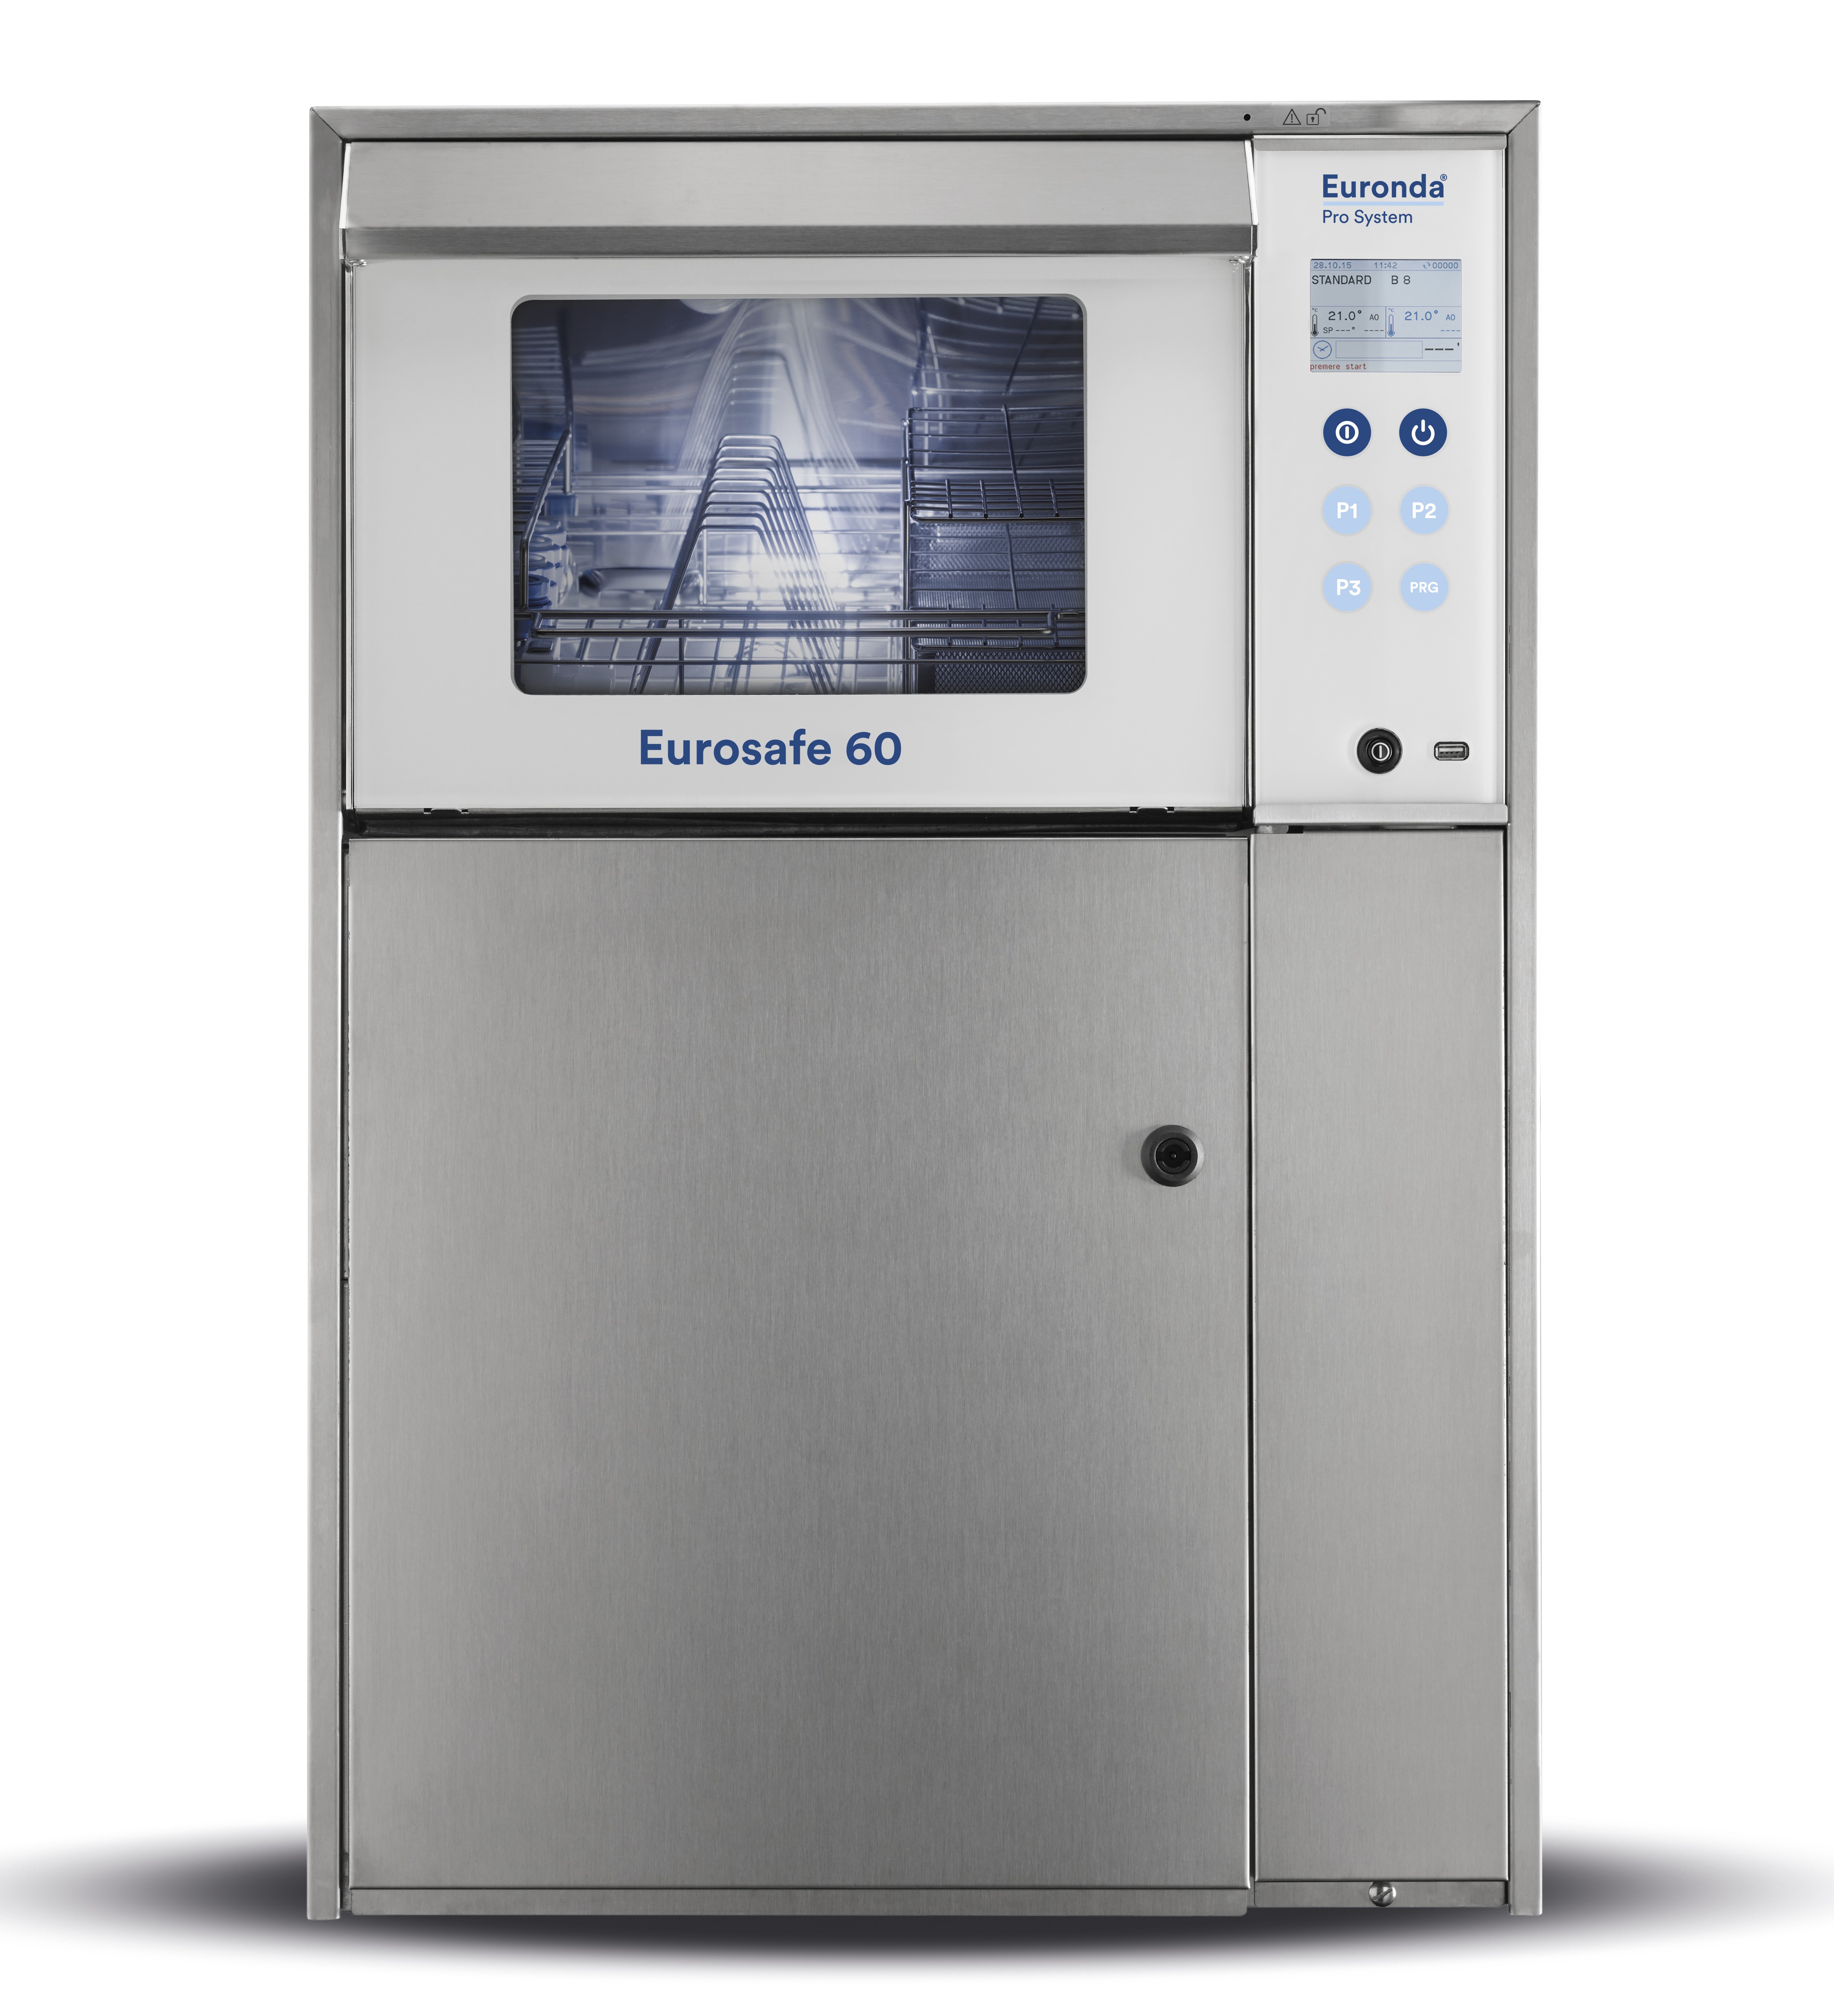 Euronda Eurosafe 60 thermal disinfector